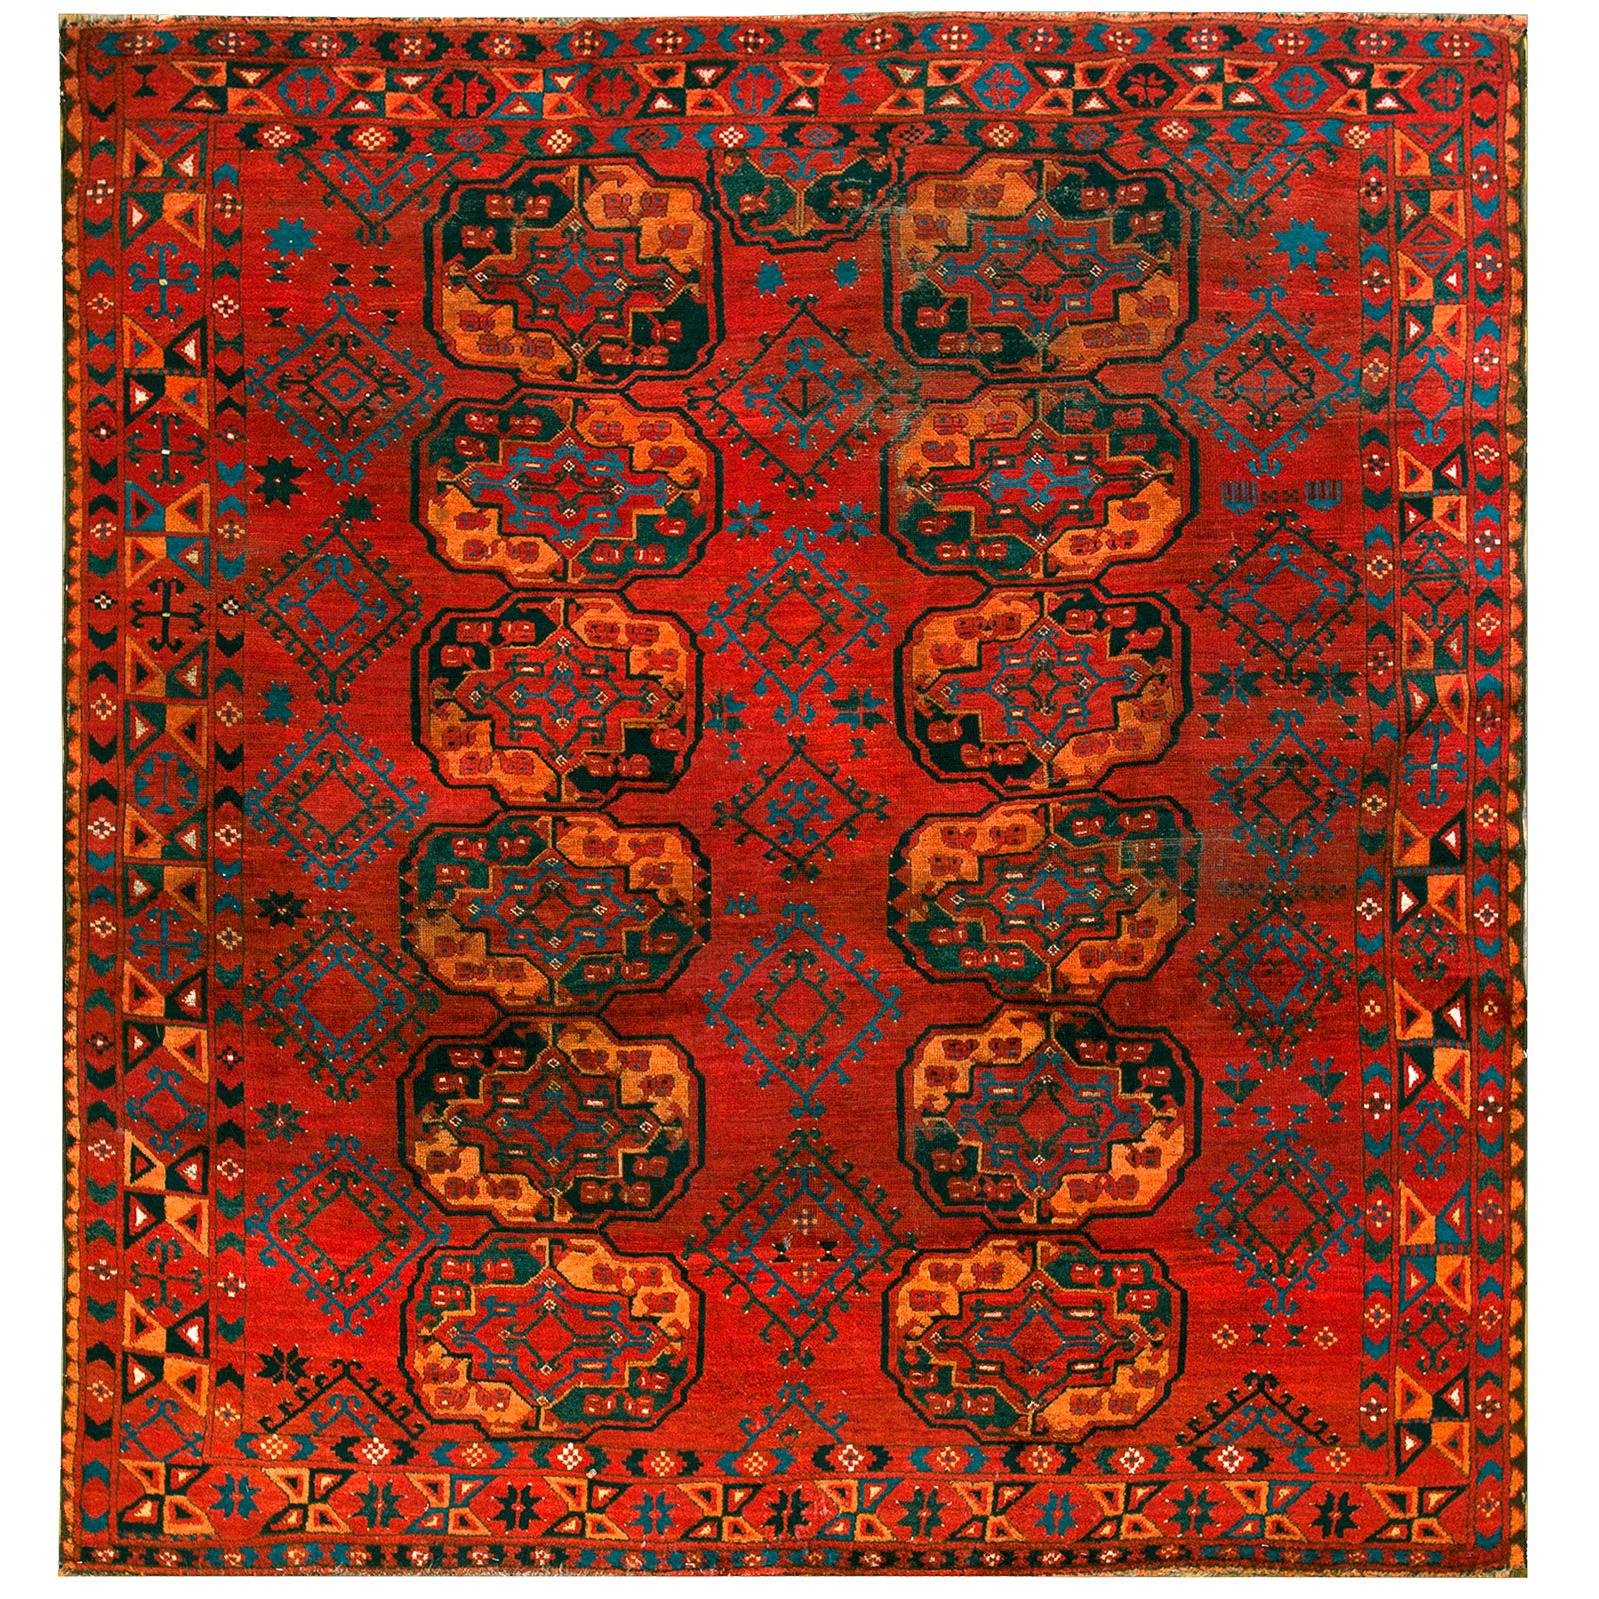 19th Century Central Asian Ersari Turkmen Carpet ( 7'2" x 7'10" - 218 x 240 )